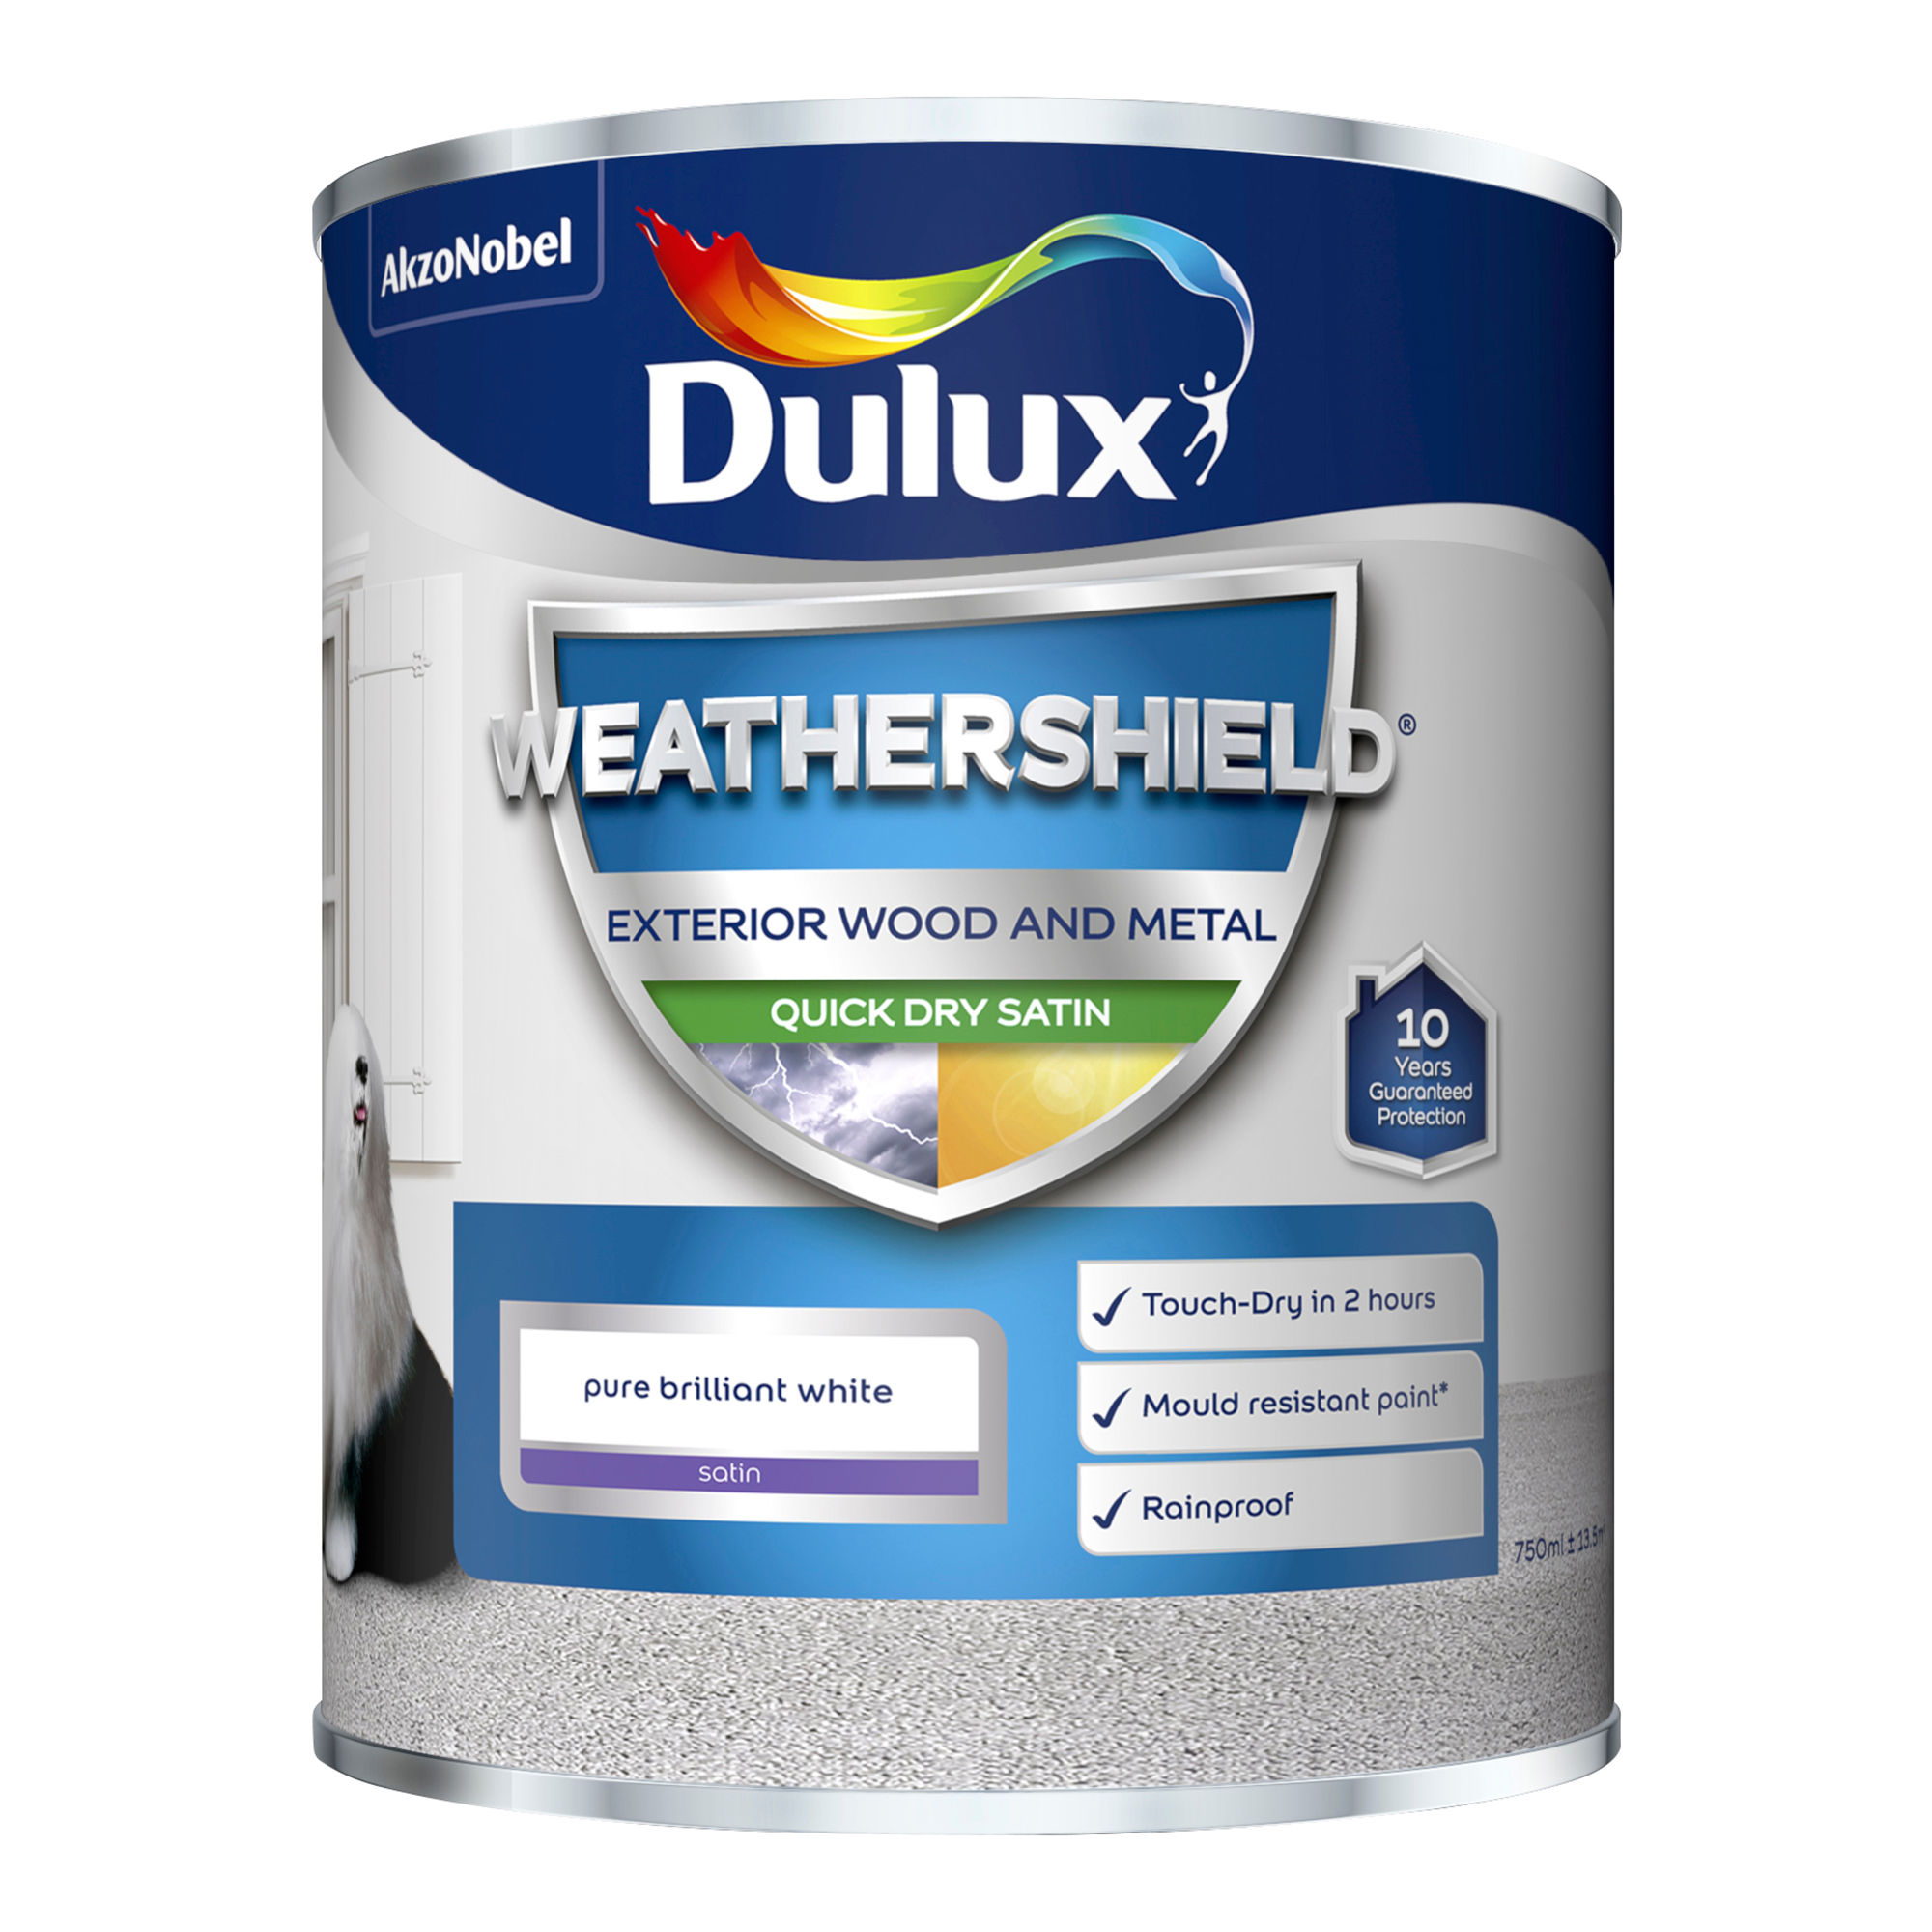 Dulux Weathershield Quick Dry Exterior Satin Paint - Pure Brilliant White (750ml)